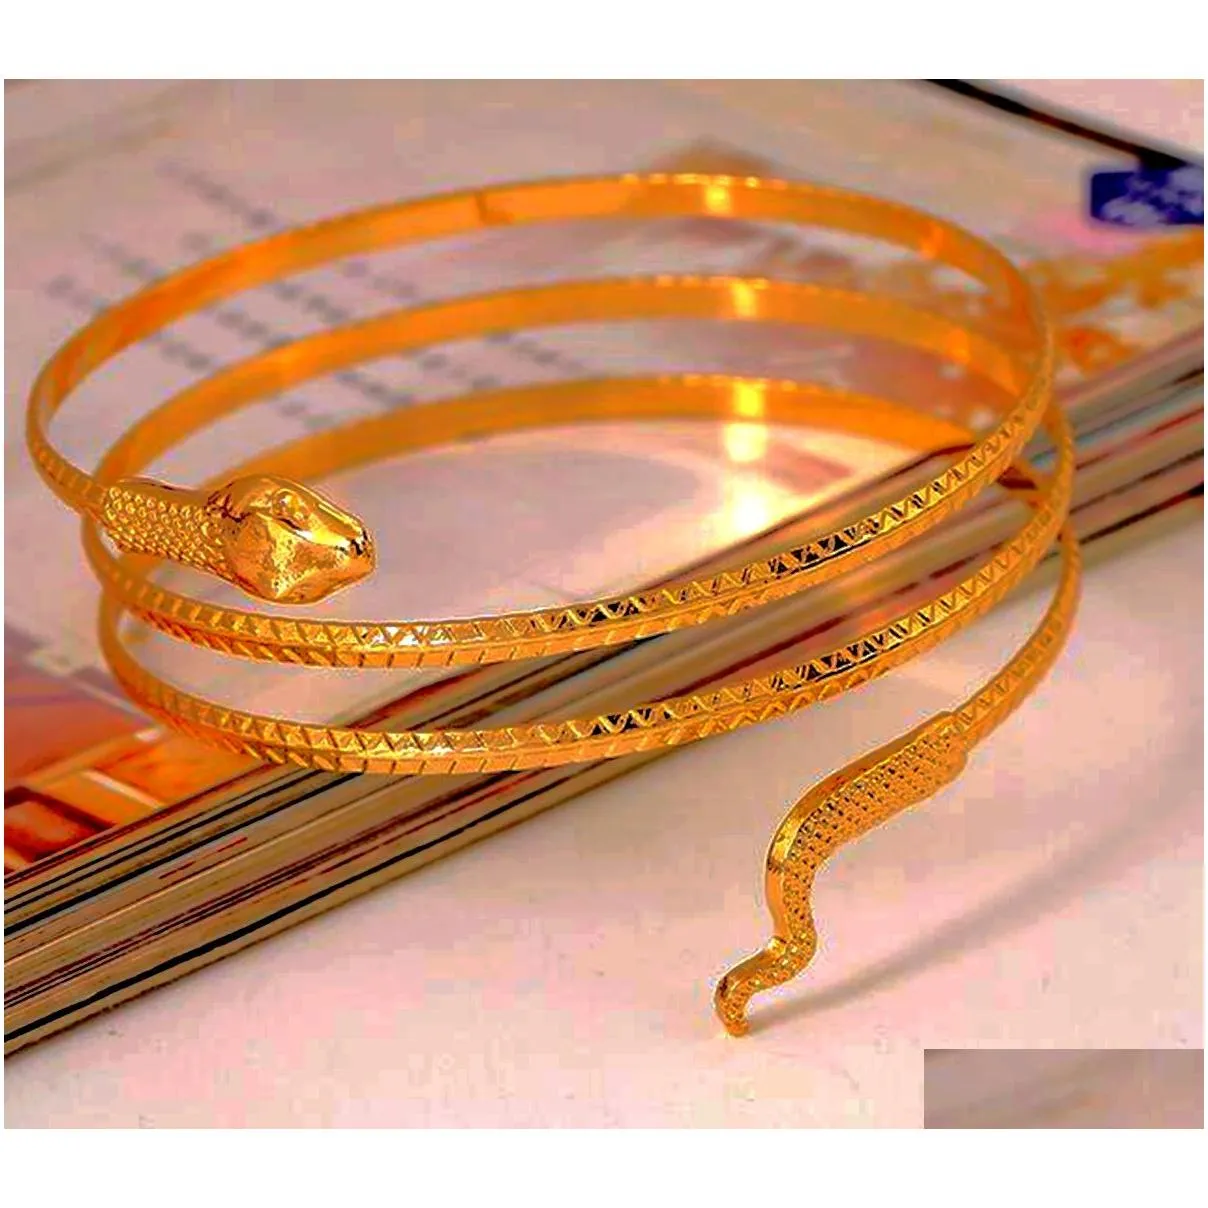 10pcs 70mm diameter punk snake charm banglefashion bracelets metal wristbands wholesale style mixed jewelry lots